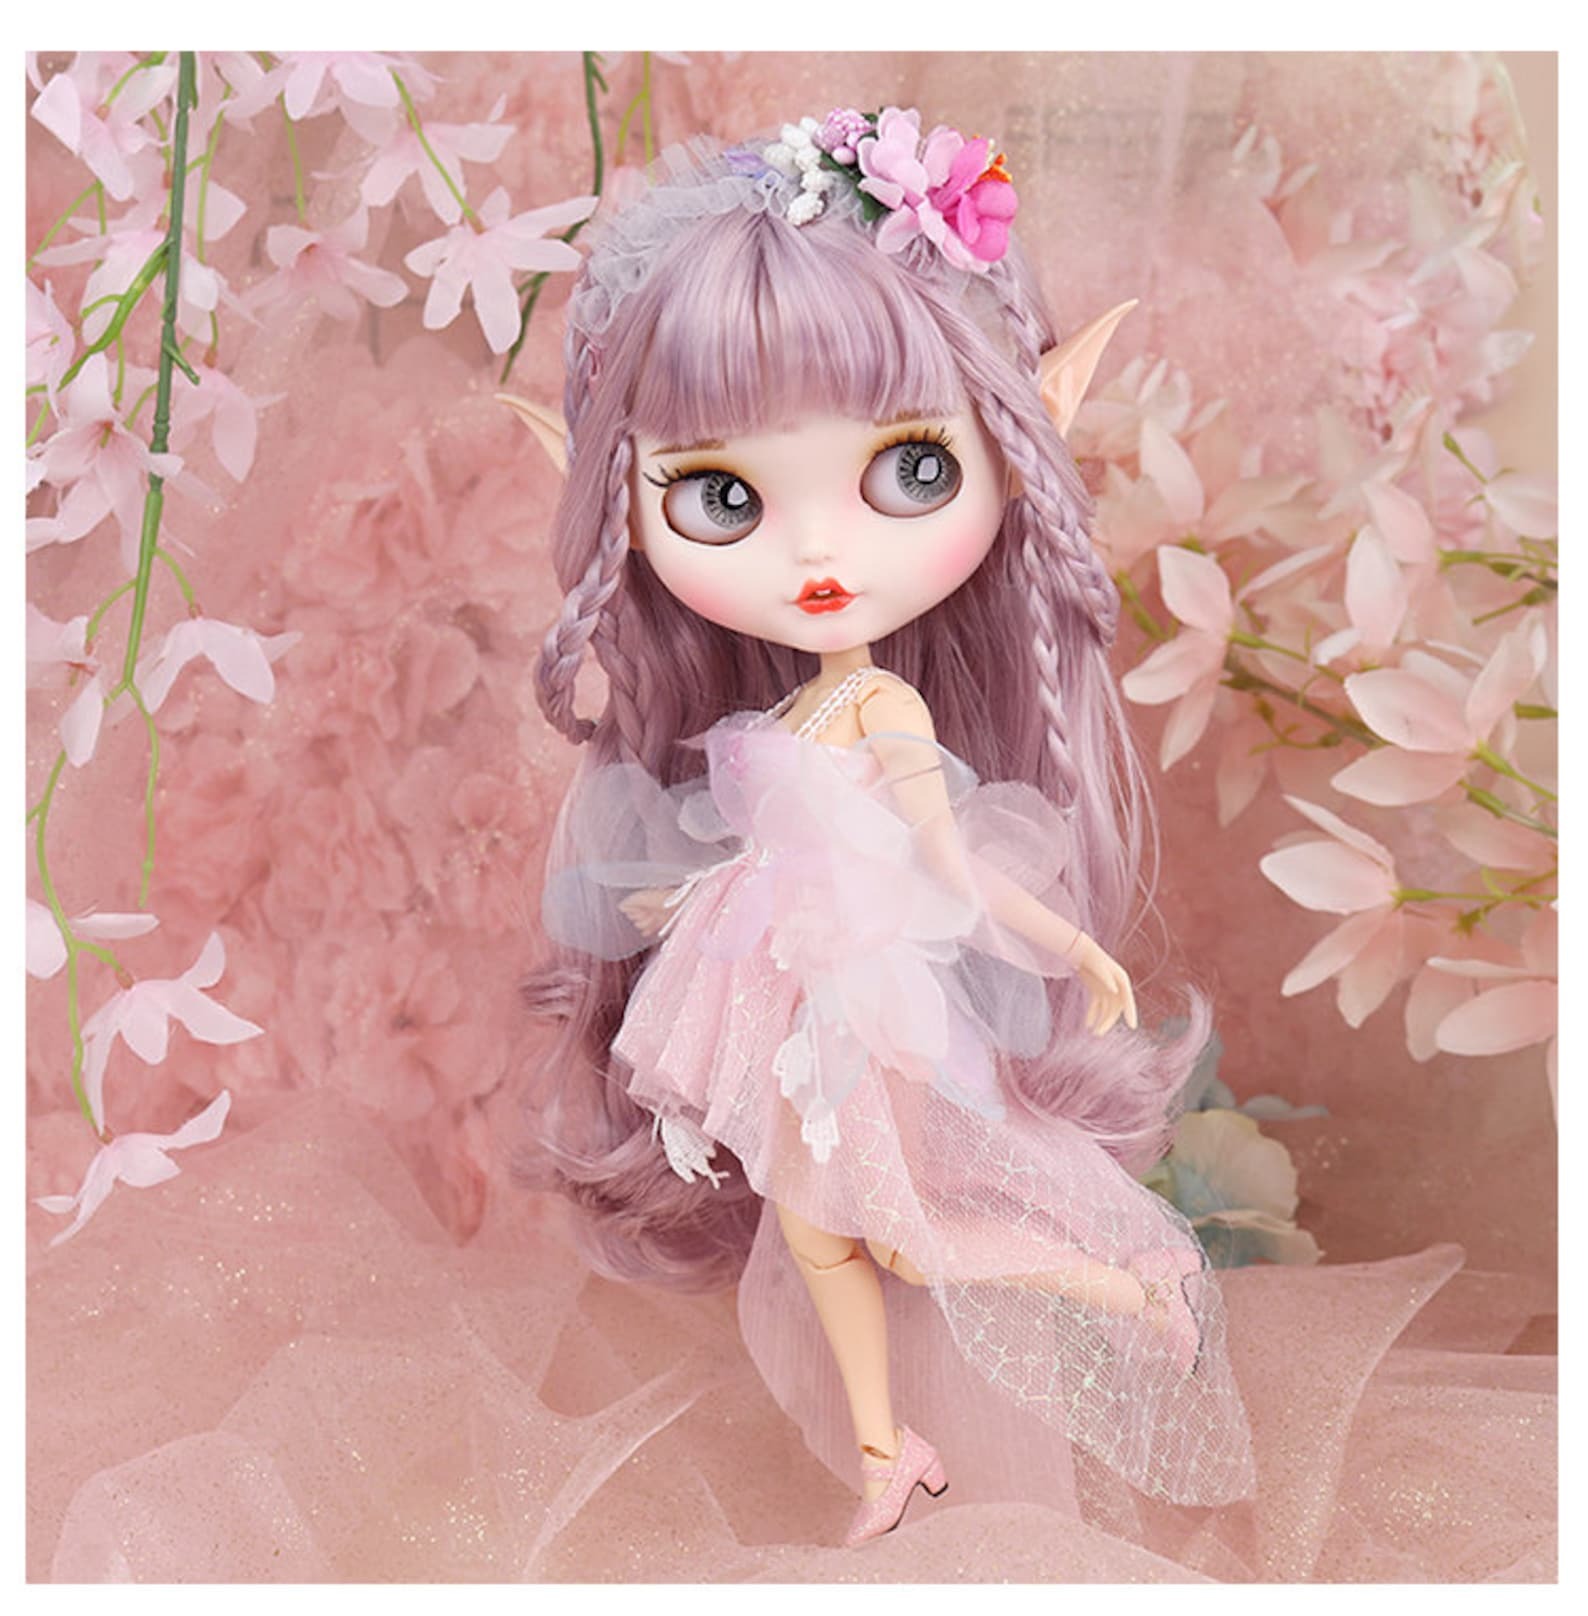 Fairy Elfie - Premium Custom Neo Blythe Doll cum Purpura Hair, White Skin & Matte Smiling Face